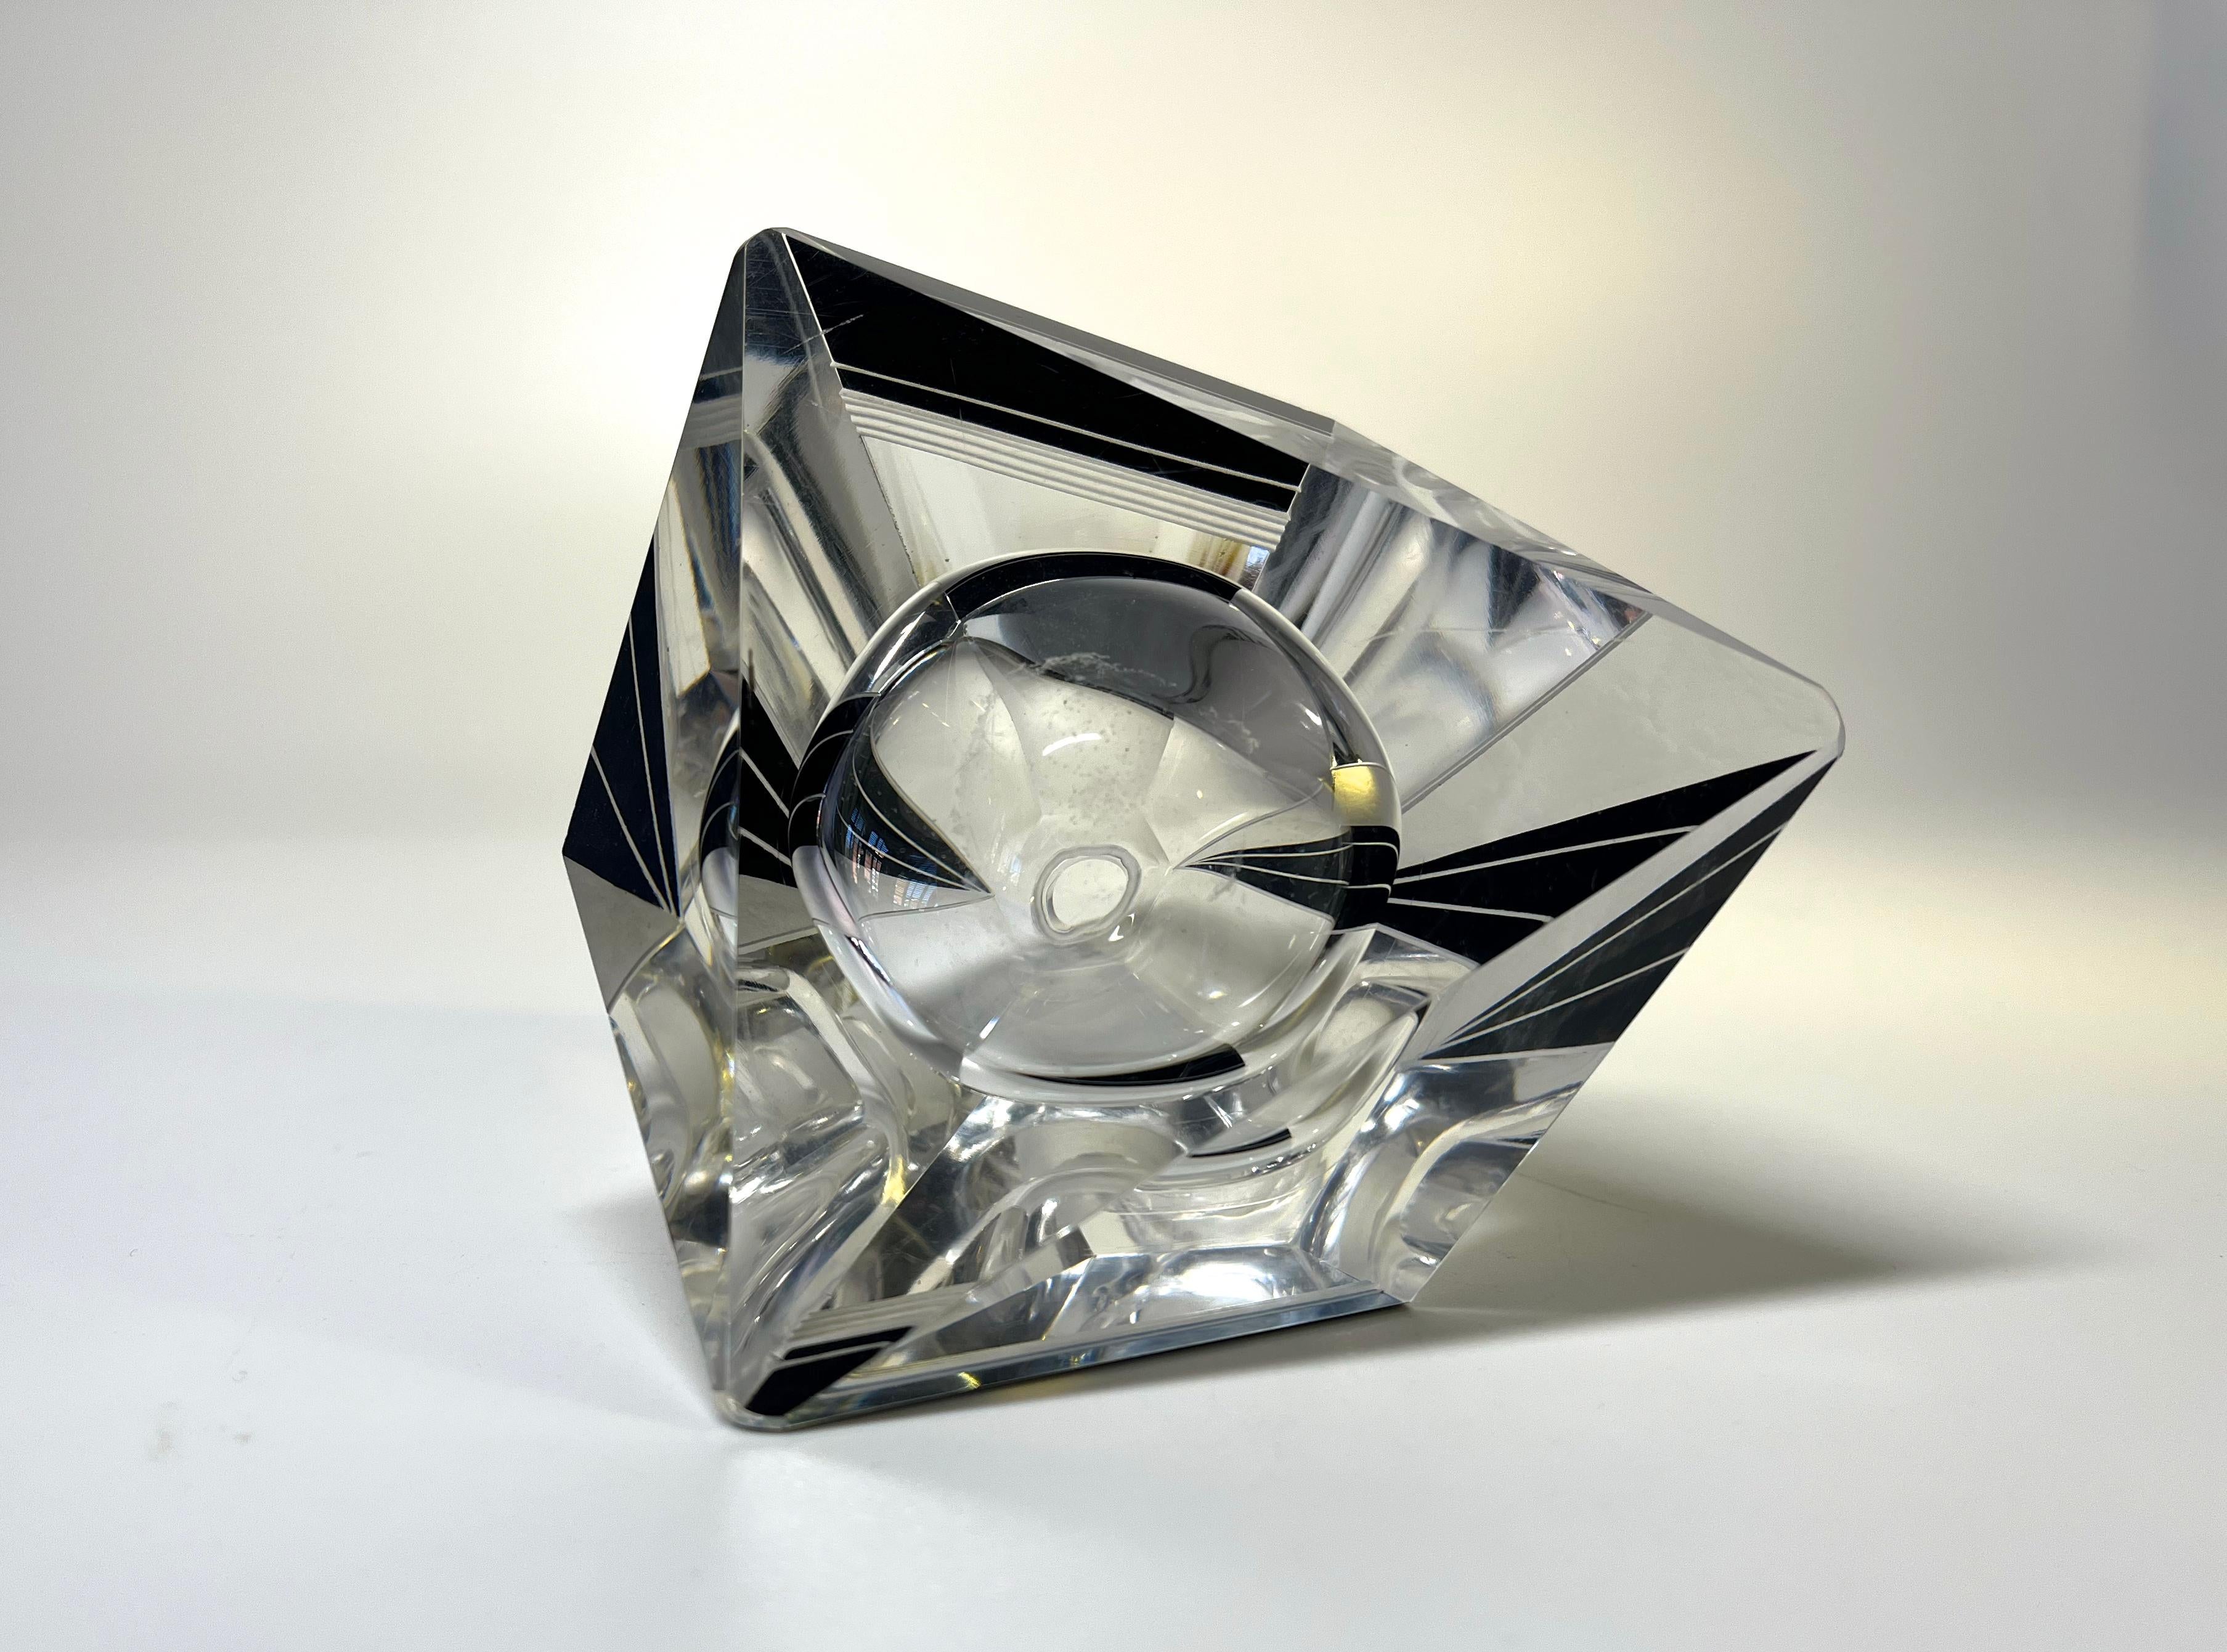 Fine Angular Geometric Czech Art Deco Black Enamel Crystal Perfume Bottle 1930s For Sale 1